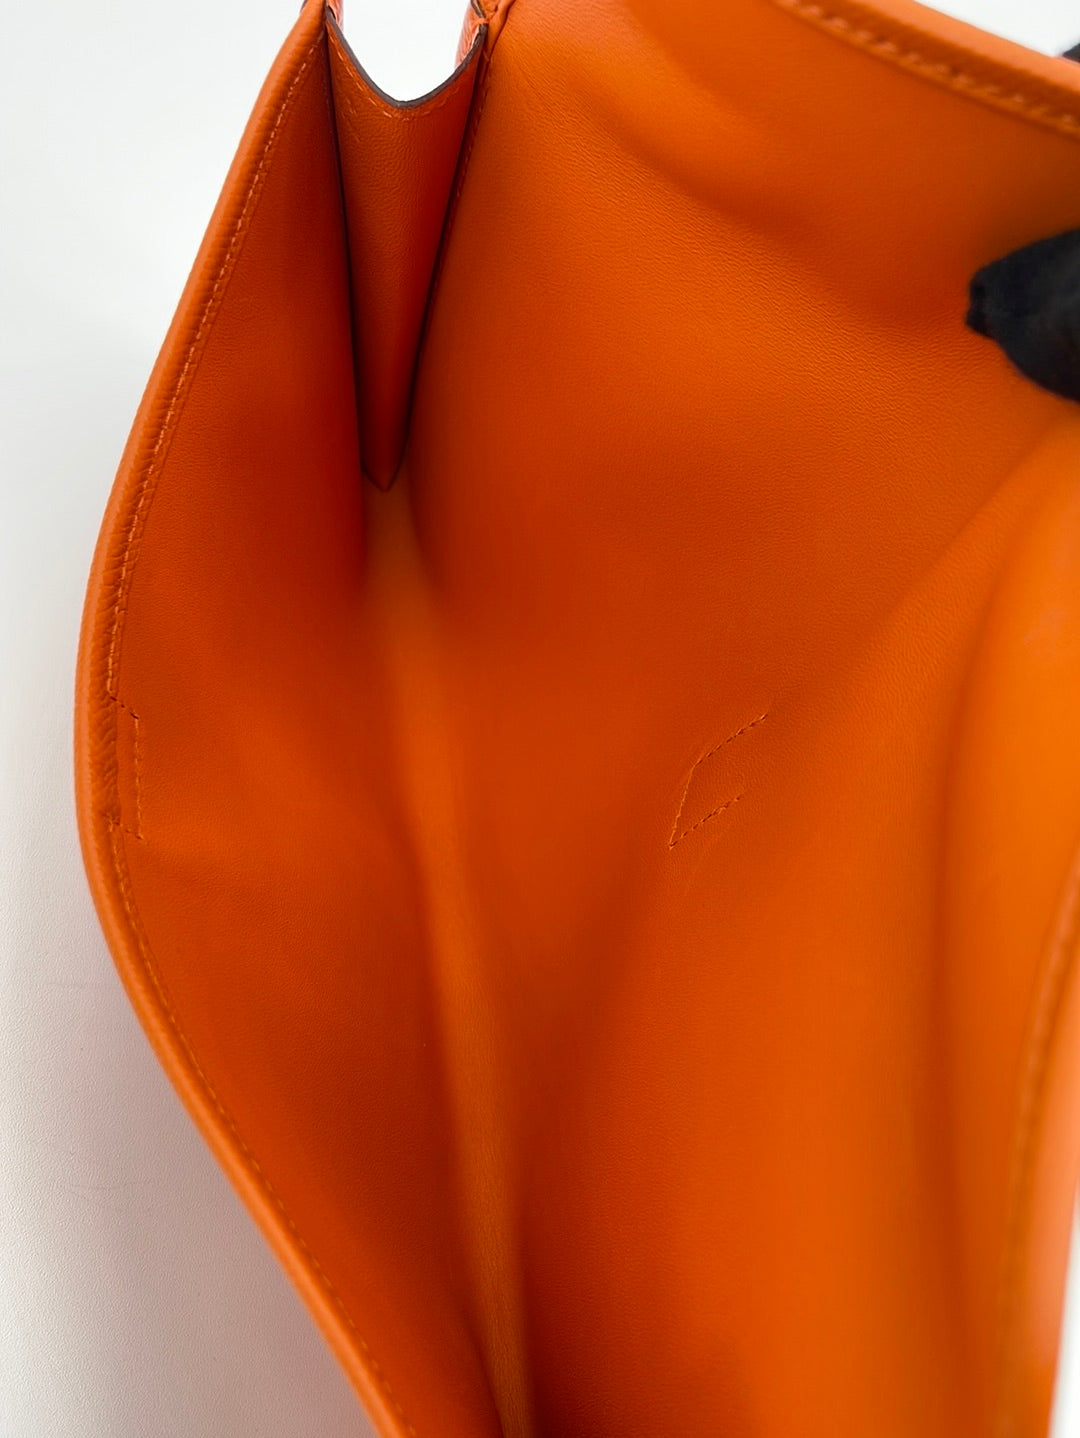 Preloved Hermes Orange Leather Jige PM Clutch QSquare+ 082323